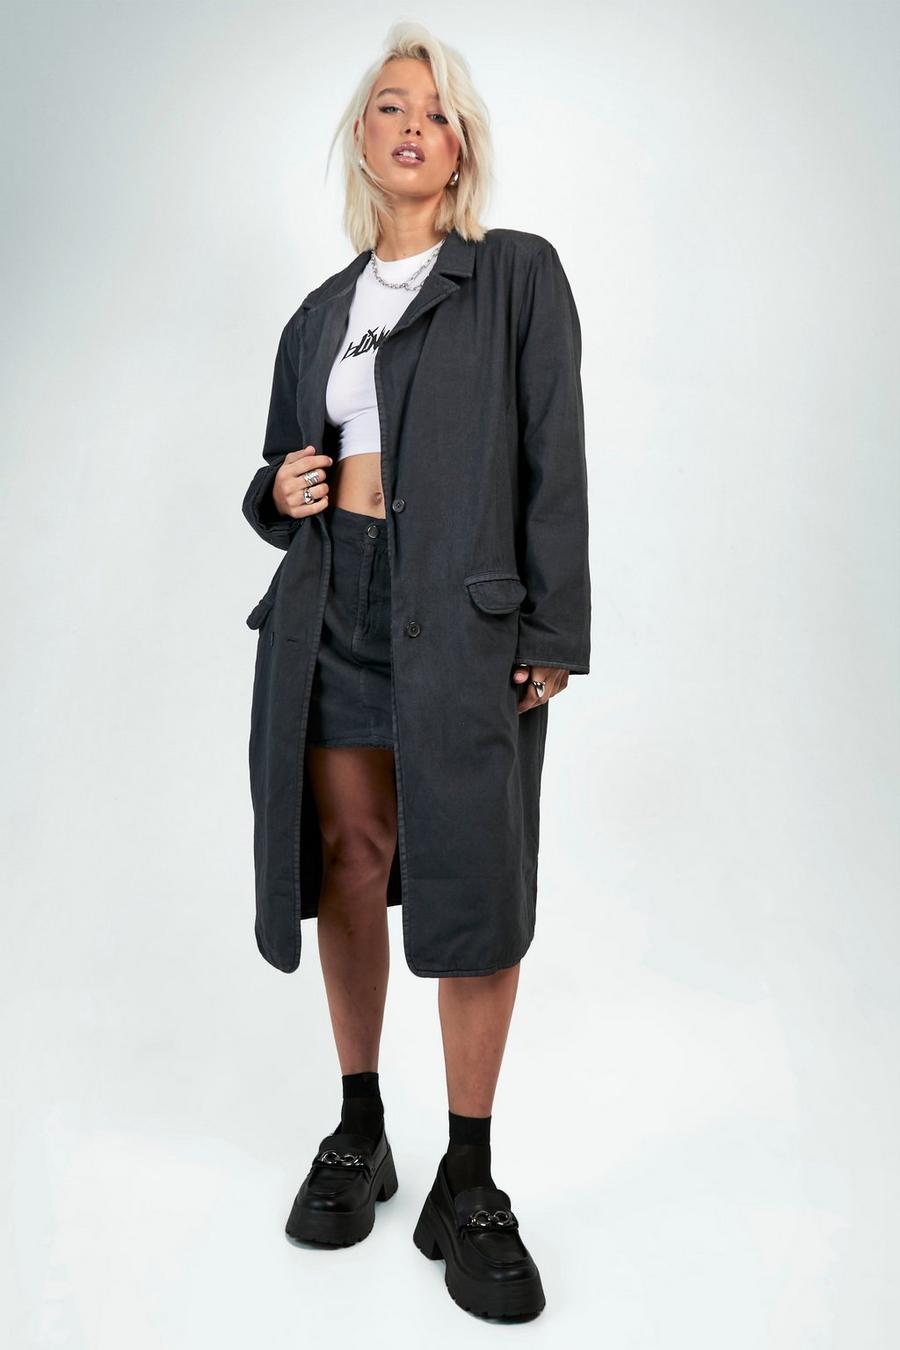 Women's Charcoal Plaid Coat, Charcoal Oversized Sweater, Black